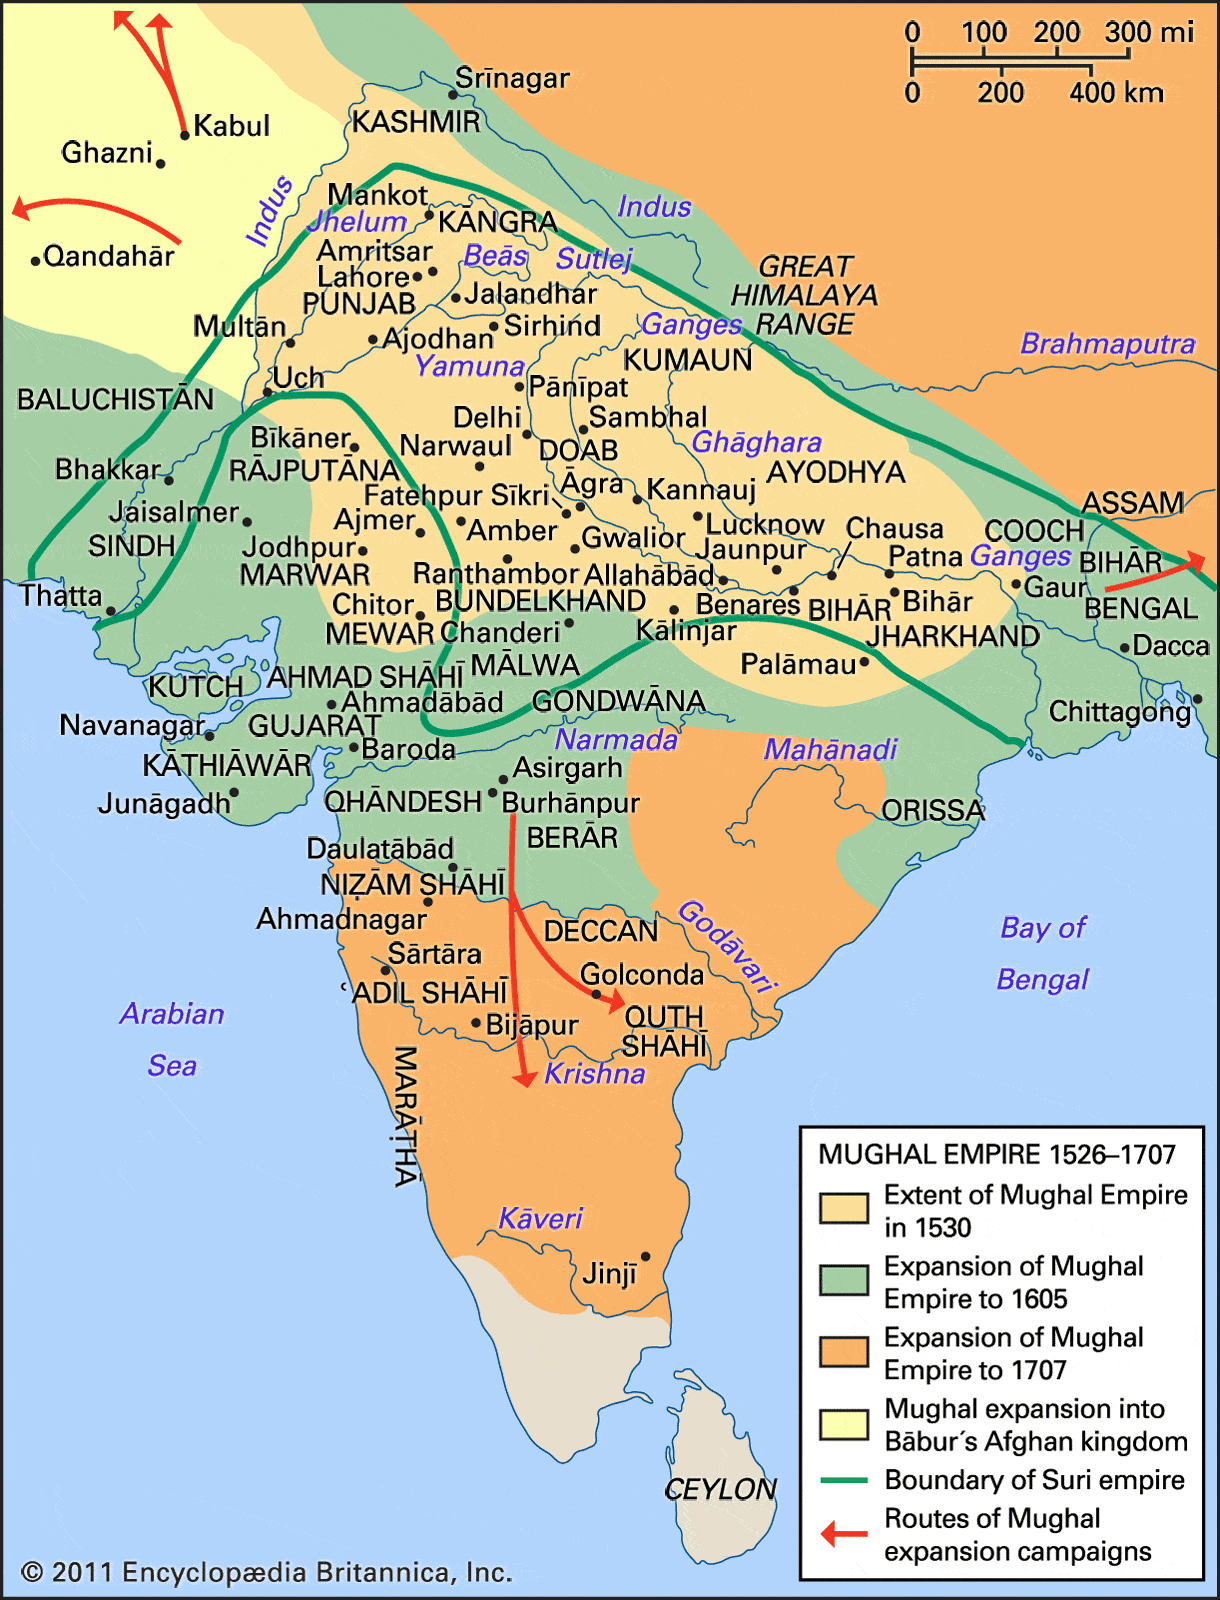 The development of Mughal Empire